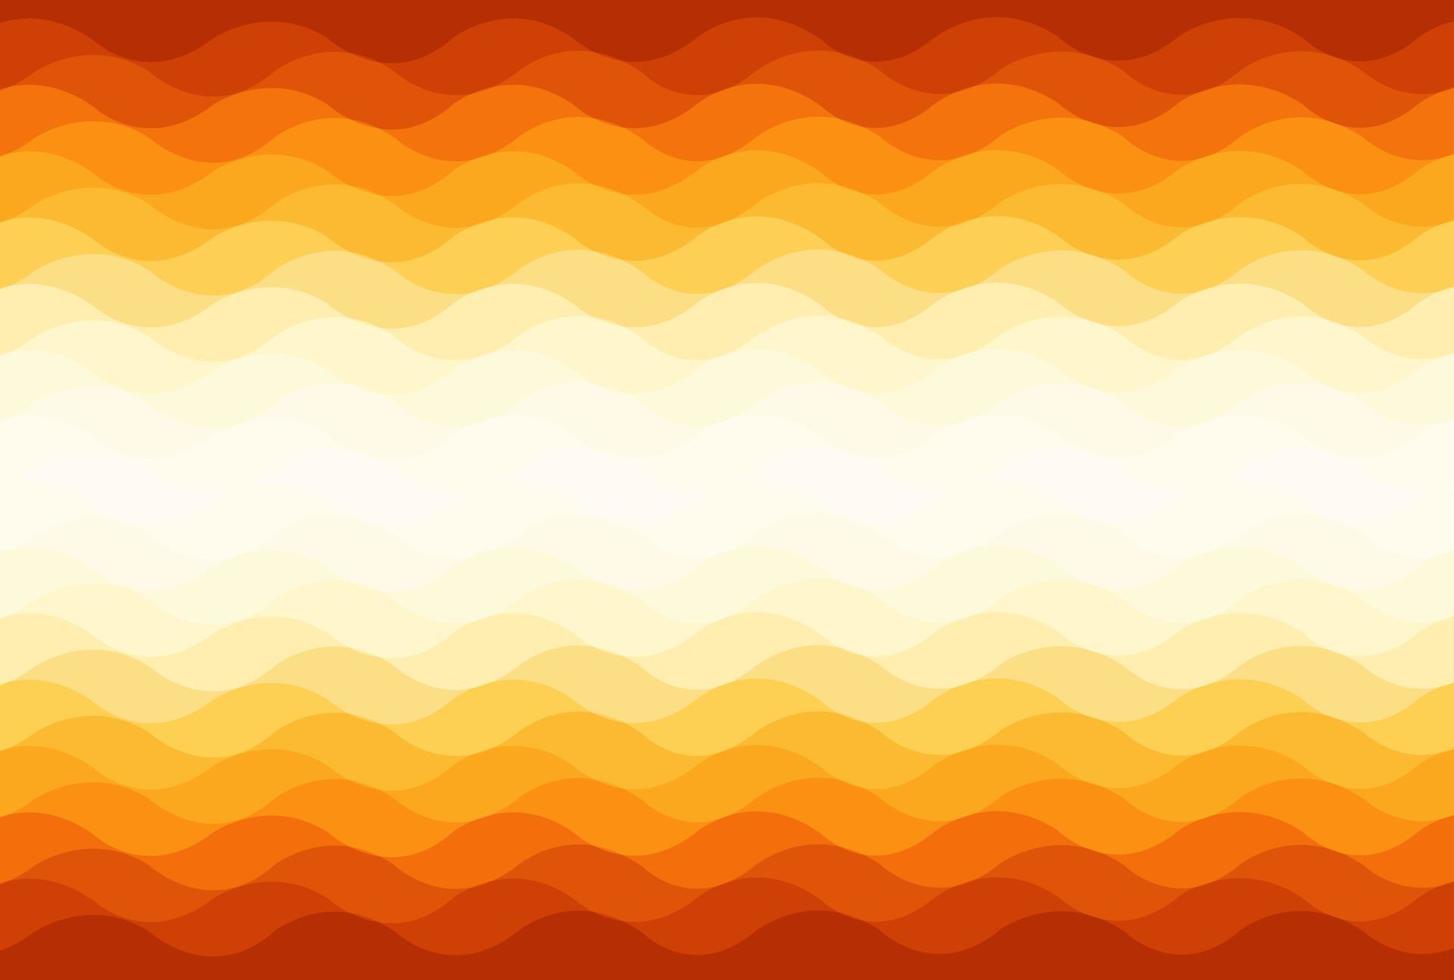 Orange gradients wave abstract vector background vector illustration